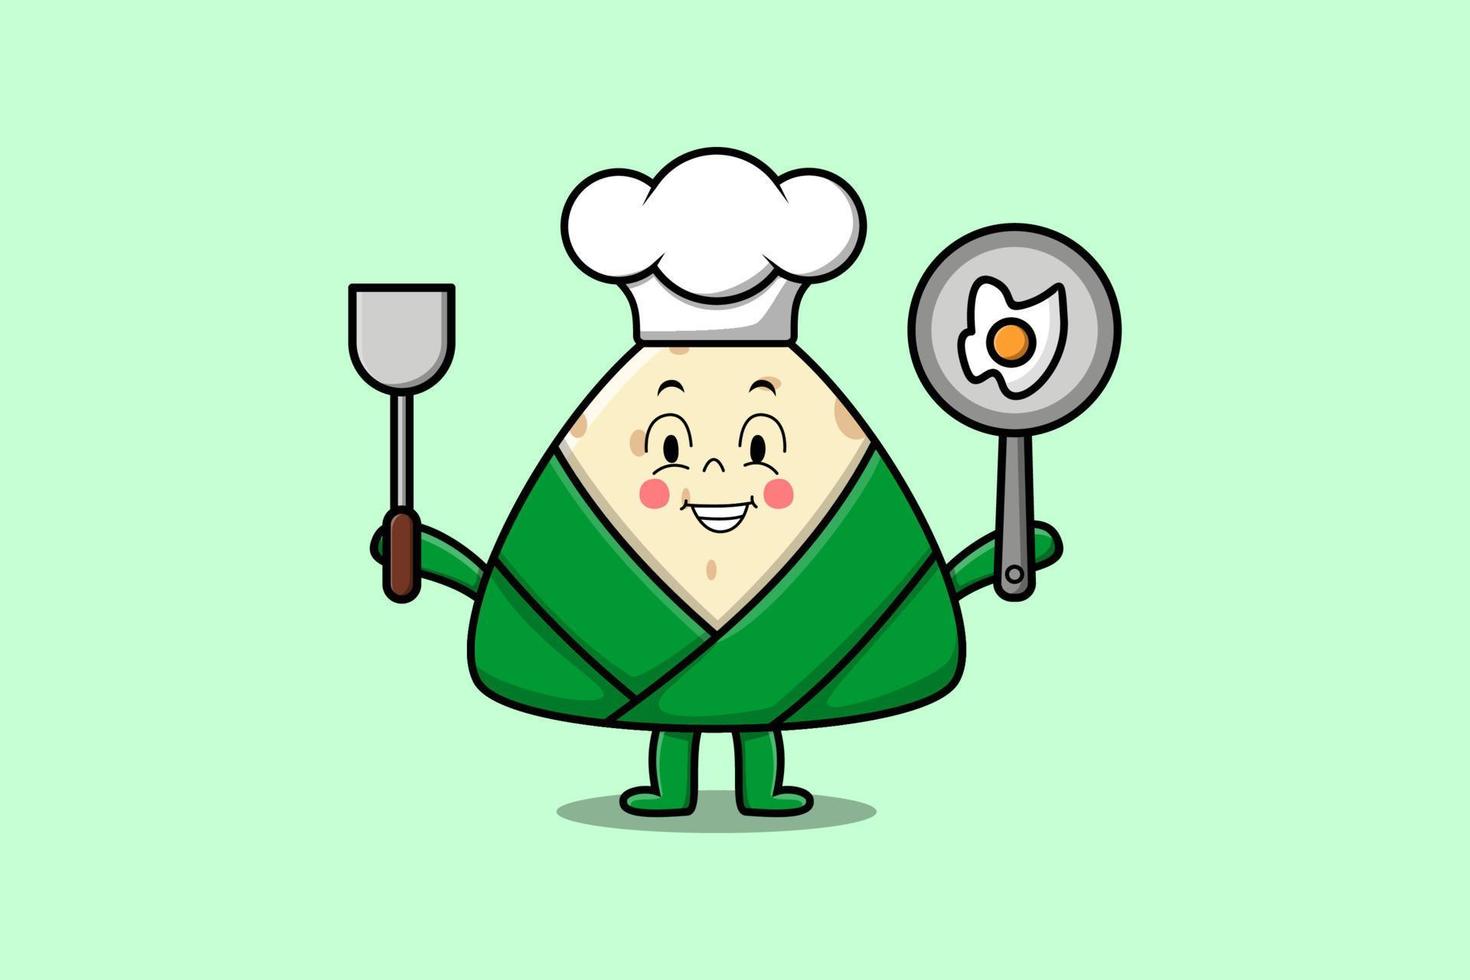 chef de bola de masa hervida de arroz chino de dibujos animados lindo vector